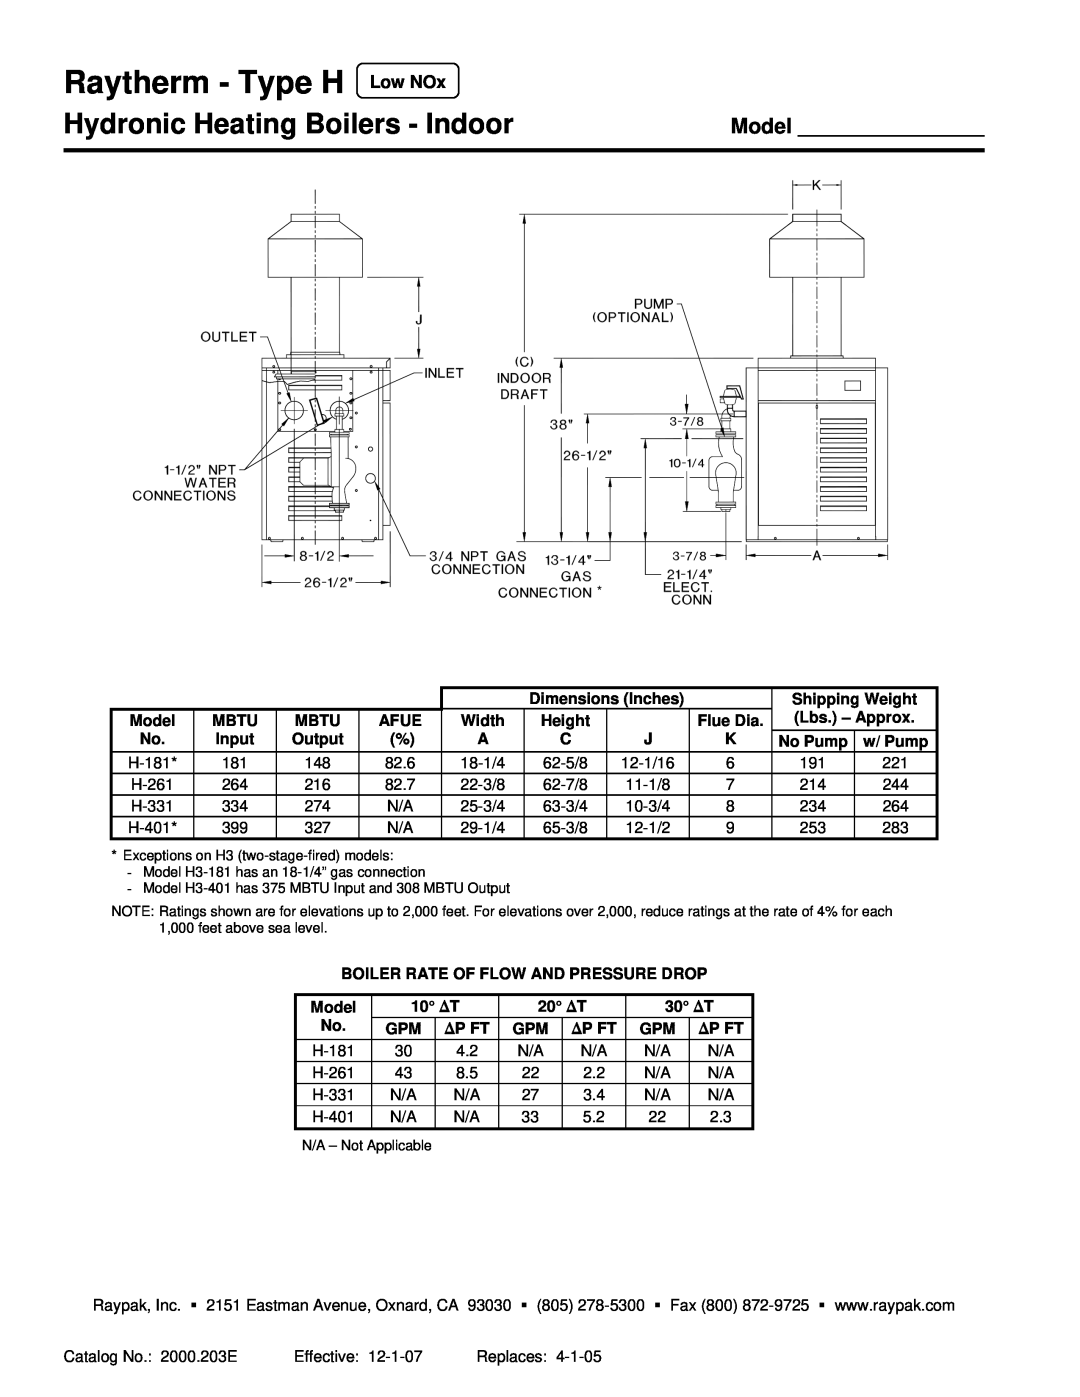 Raypak 181-401 warranty Raytherm - Type H Low NOx, Hydronic Heating Boilers - Indoor, Model 